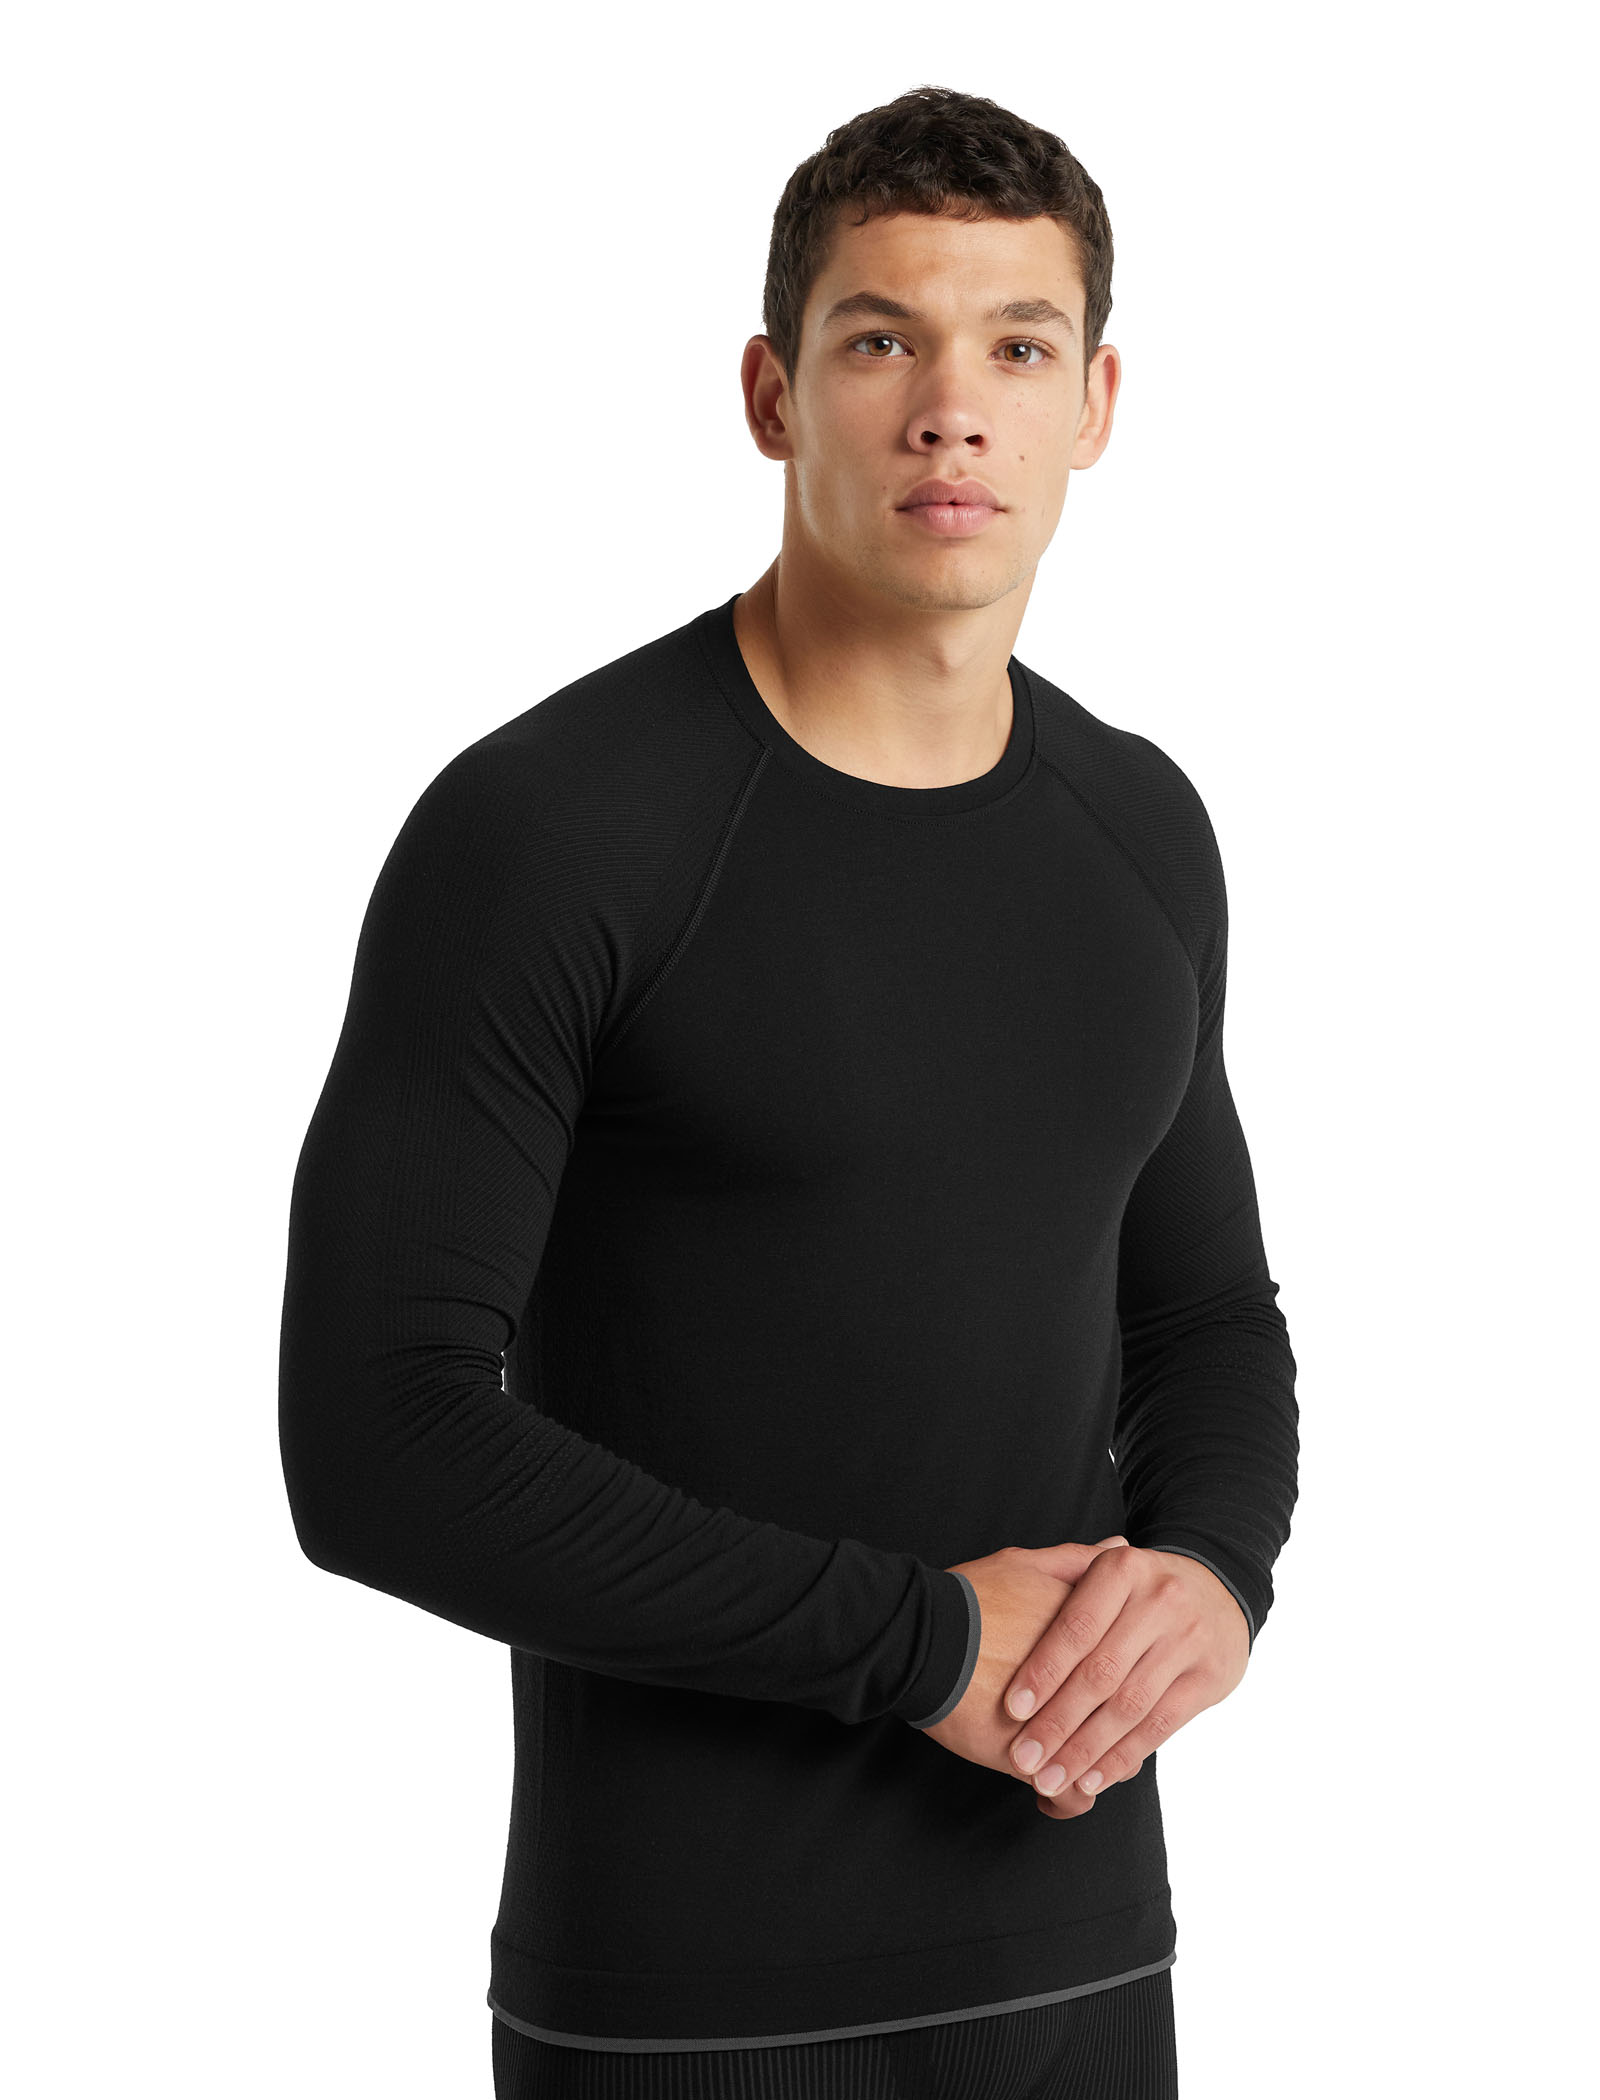 THERMOWAVE - MERINO XTREME / Camisa térmica de lana merino para hombre /  DARK SEA + ZIP - SKATE GURU INC